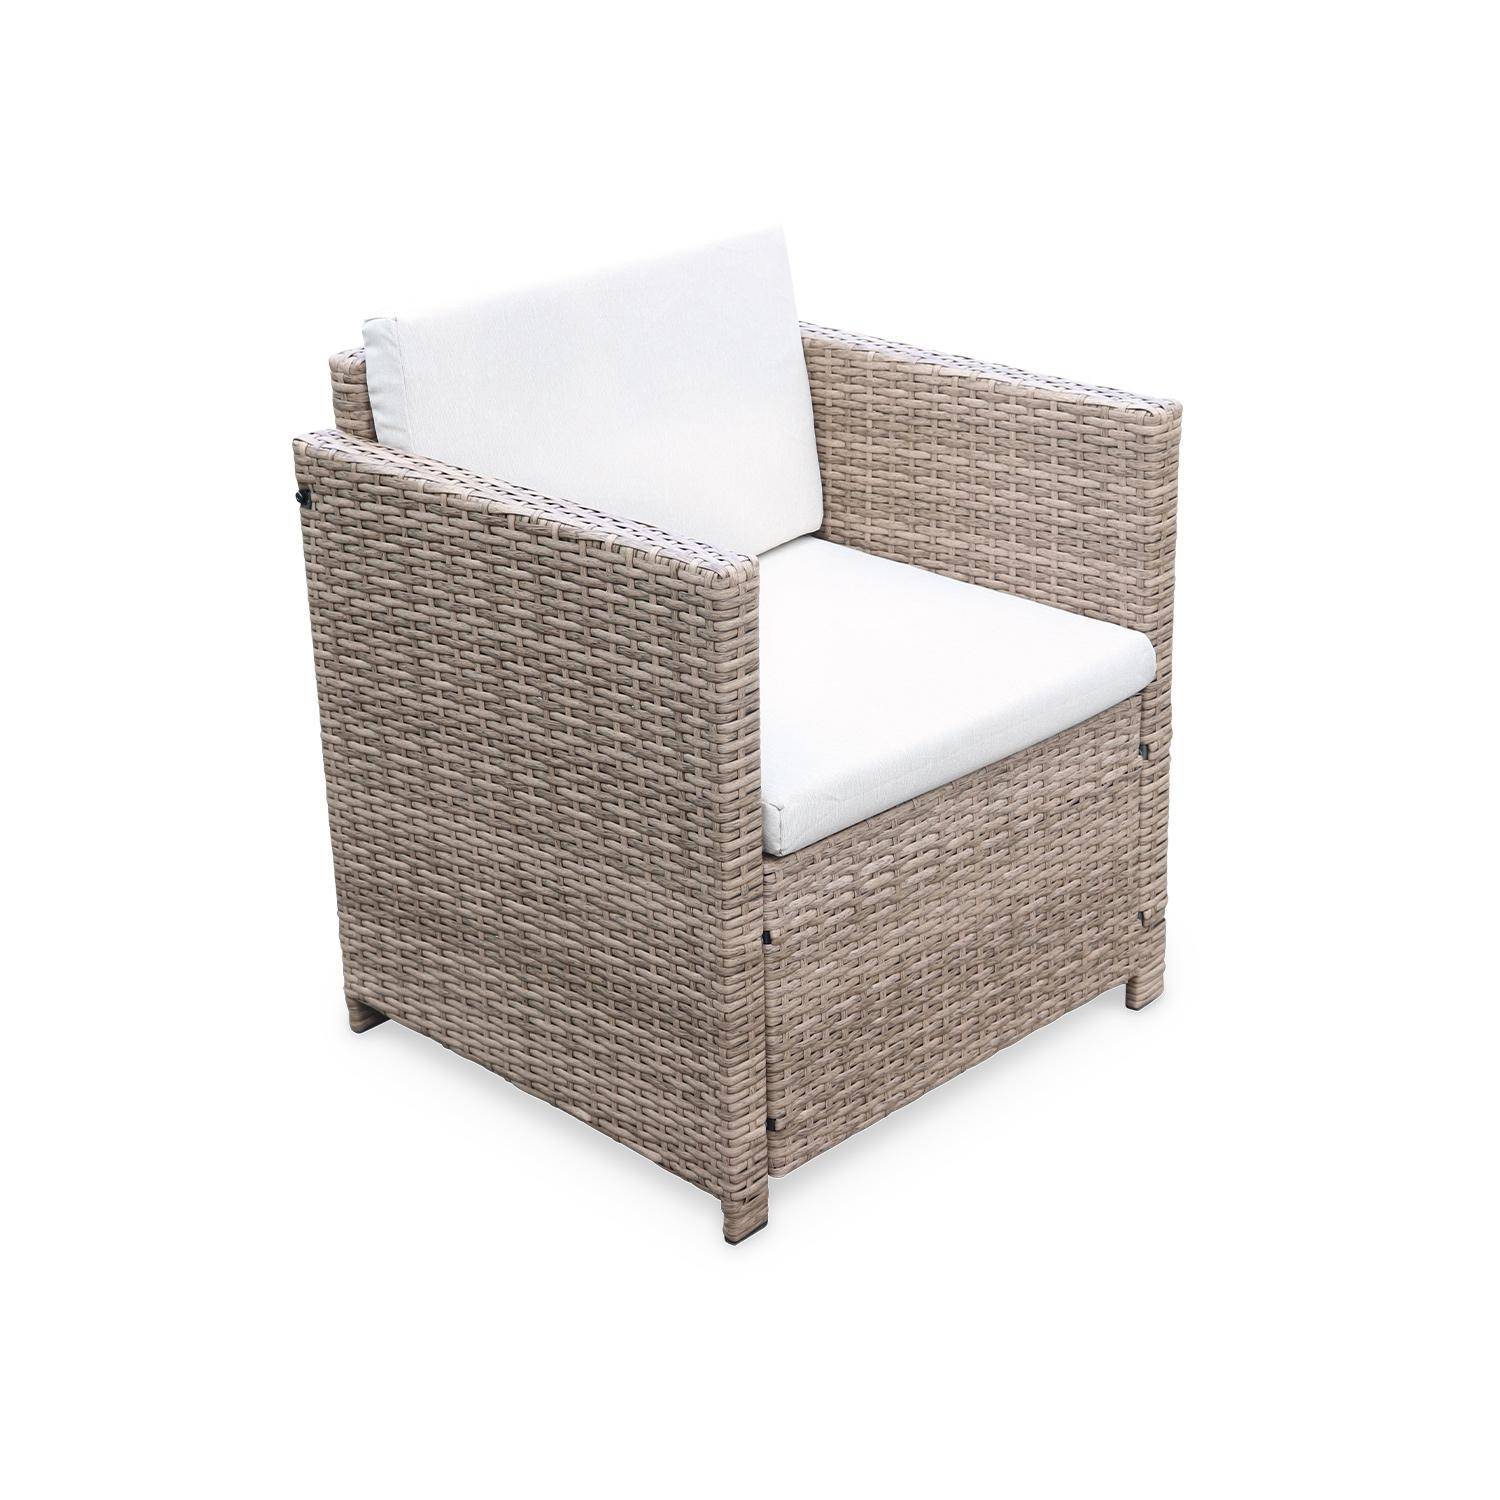 4-seater polyrattan garden sofa set - sofa, 2 armchairs, coffee table - Perugia - Natural Beige rattan, Beige cushions Photo6